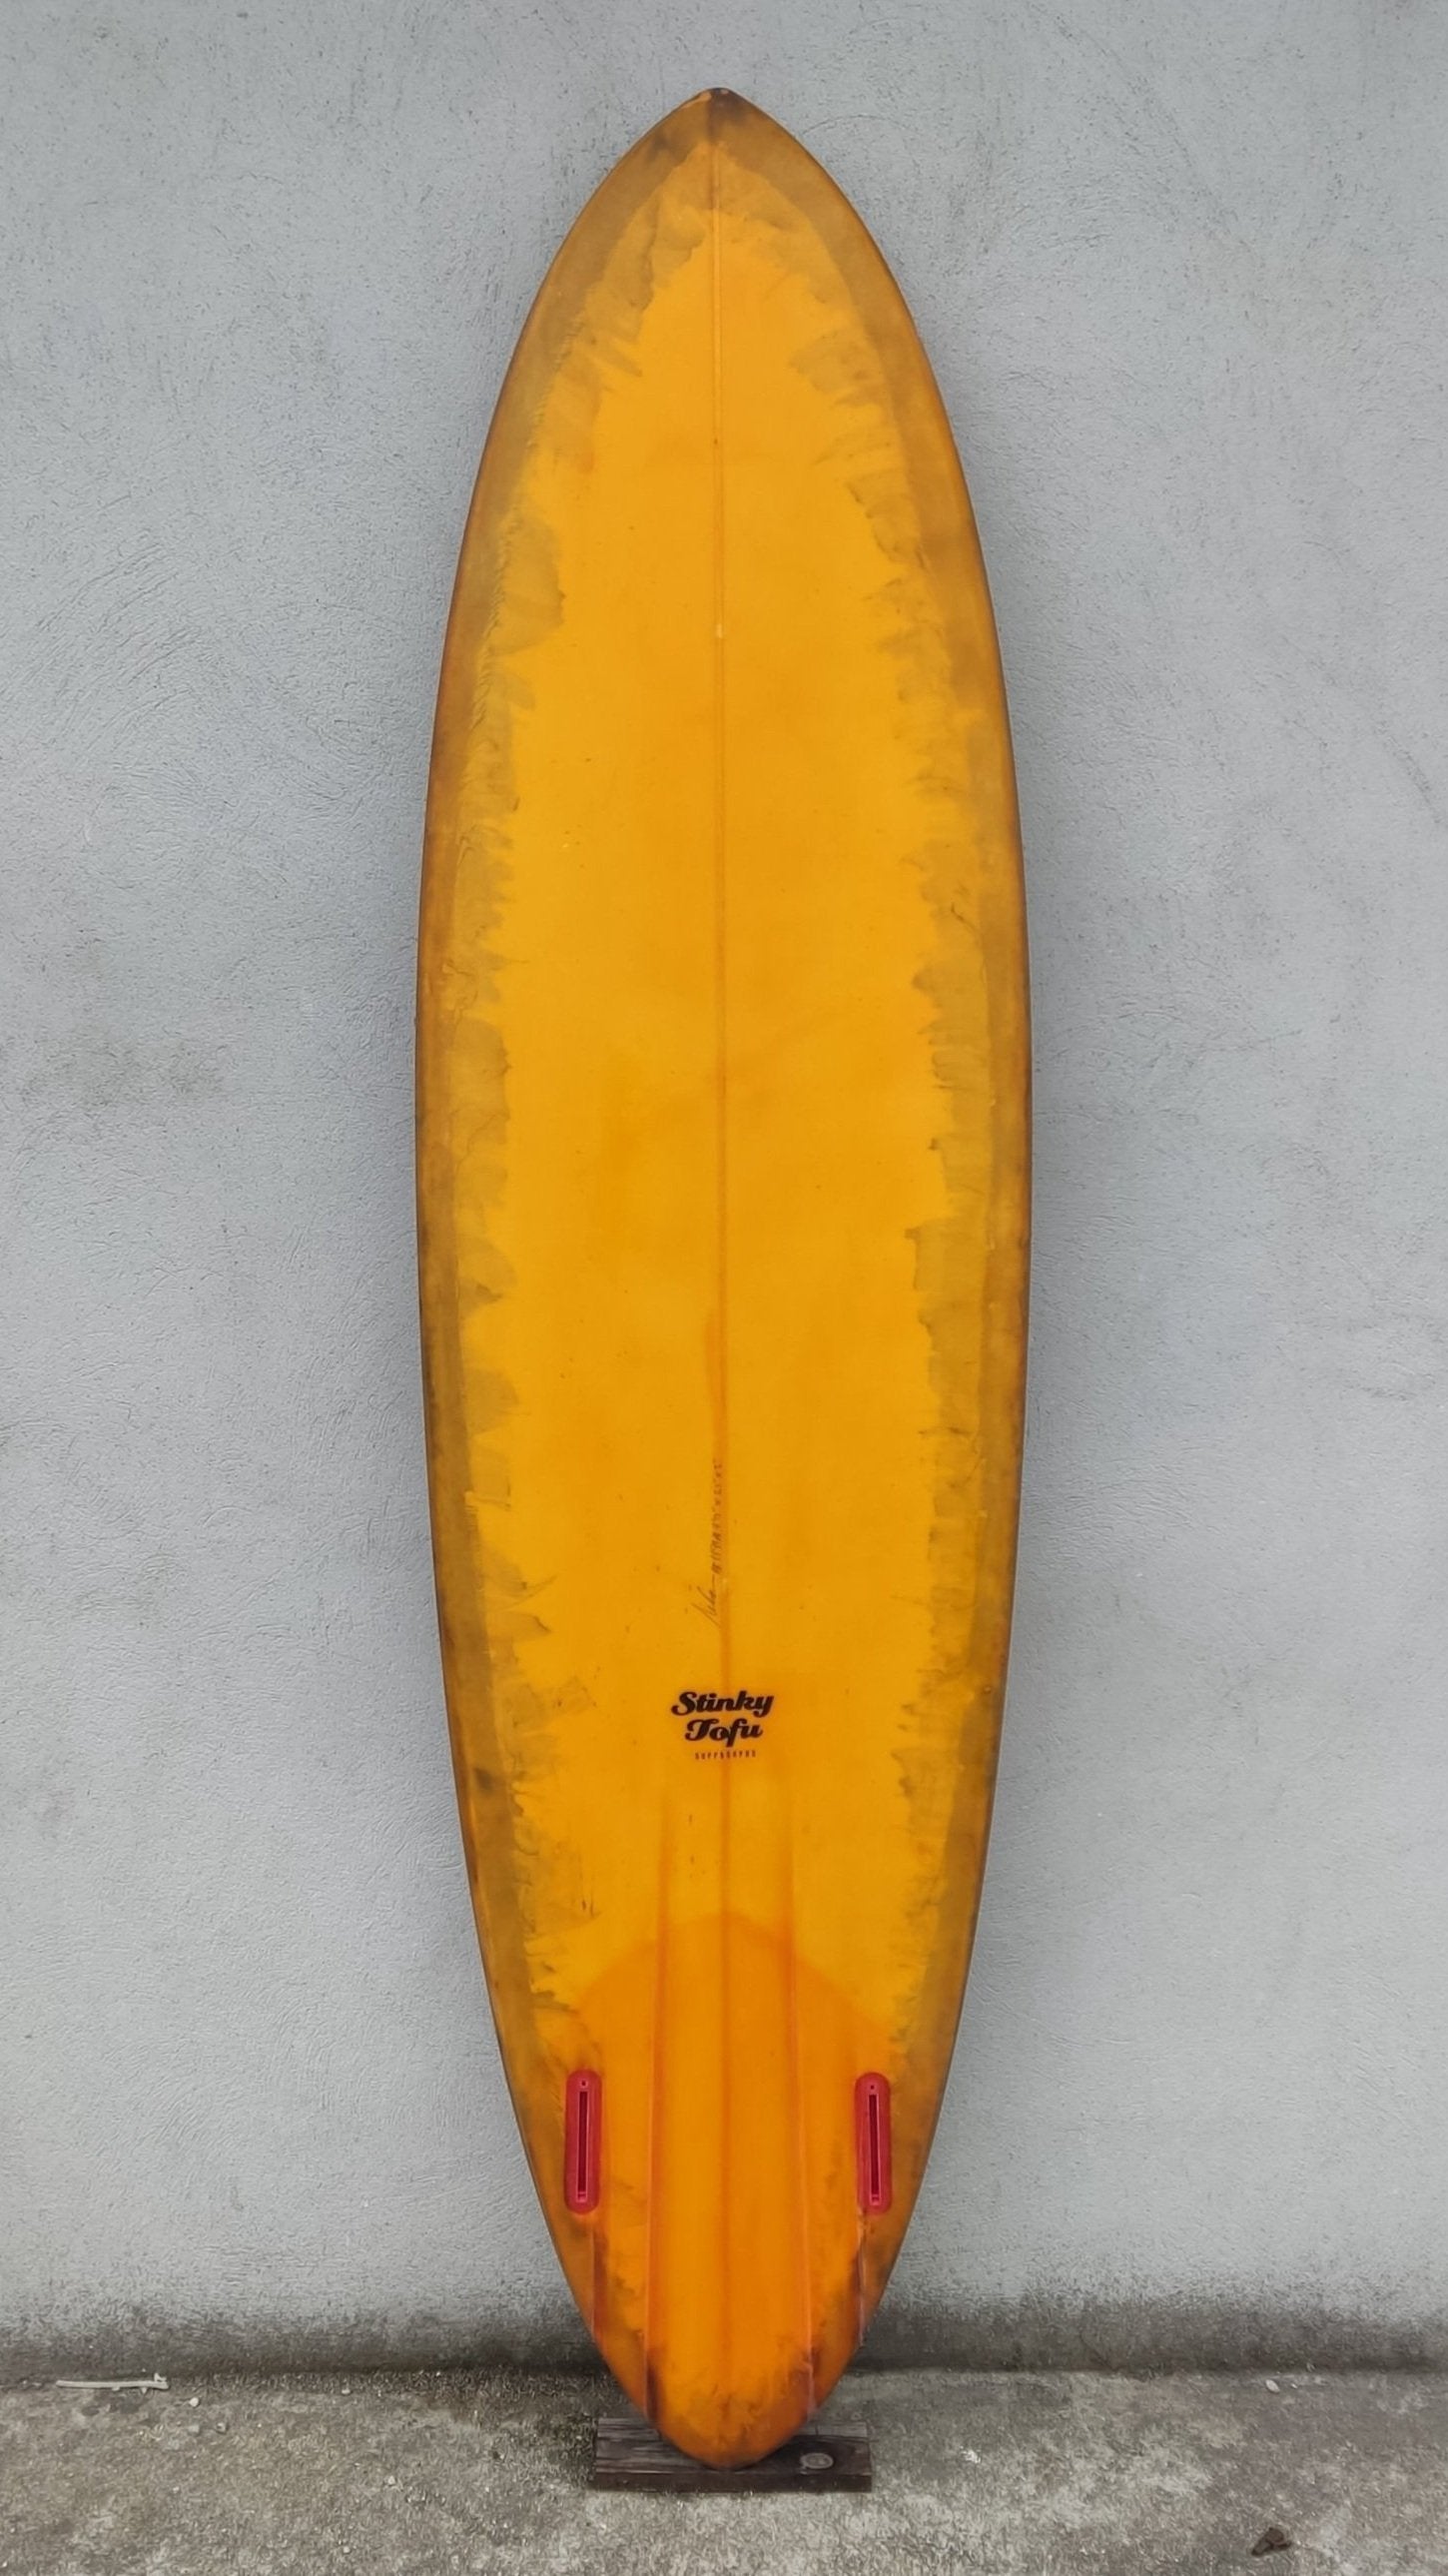 Rebel Rebel — STINKY TOFU SURFBOARDS